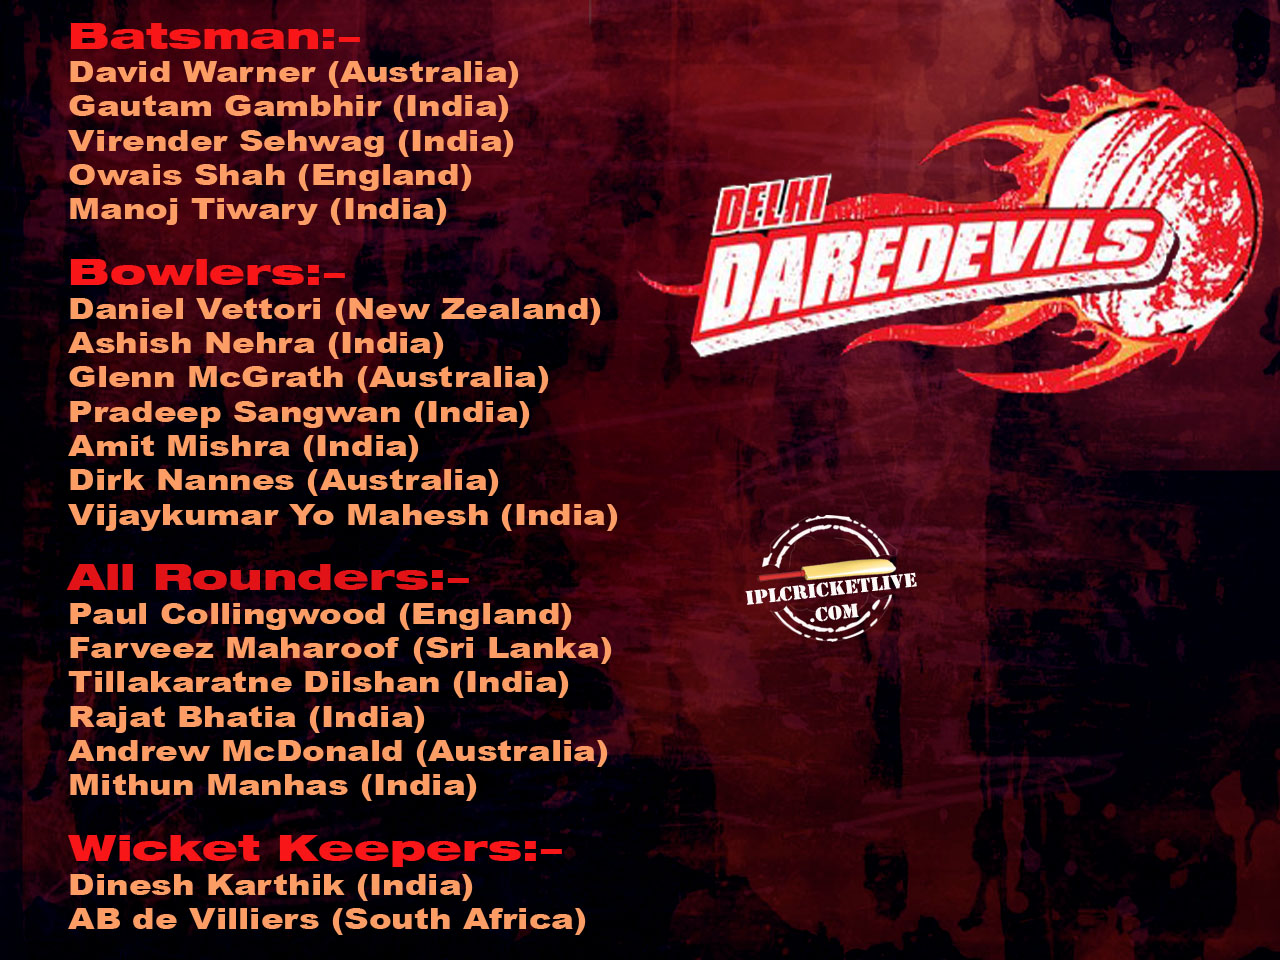 IPL 2009 Delhi DareDevils team members. Akshay Kumar is the brand ambassador 